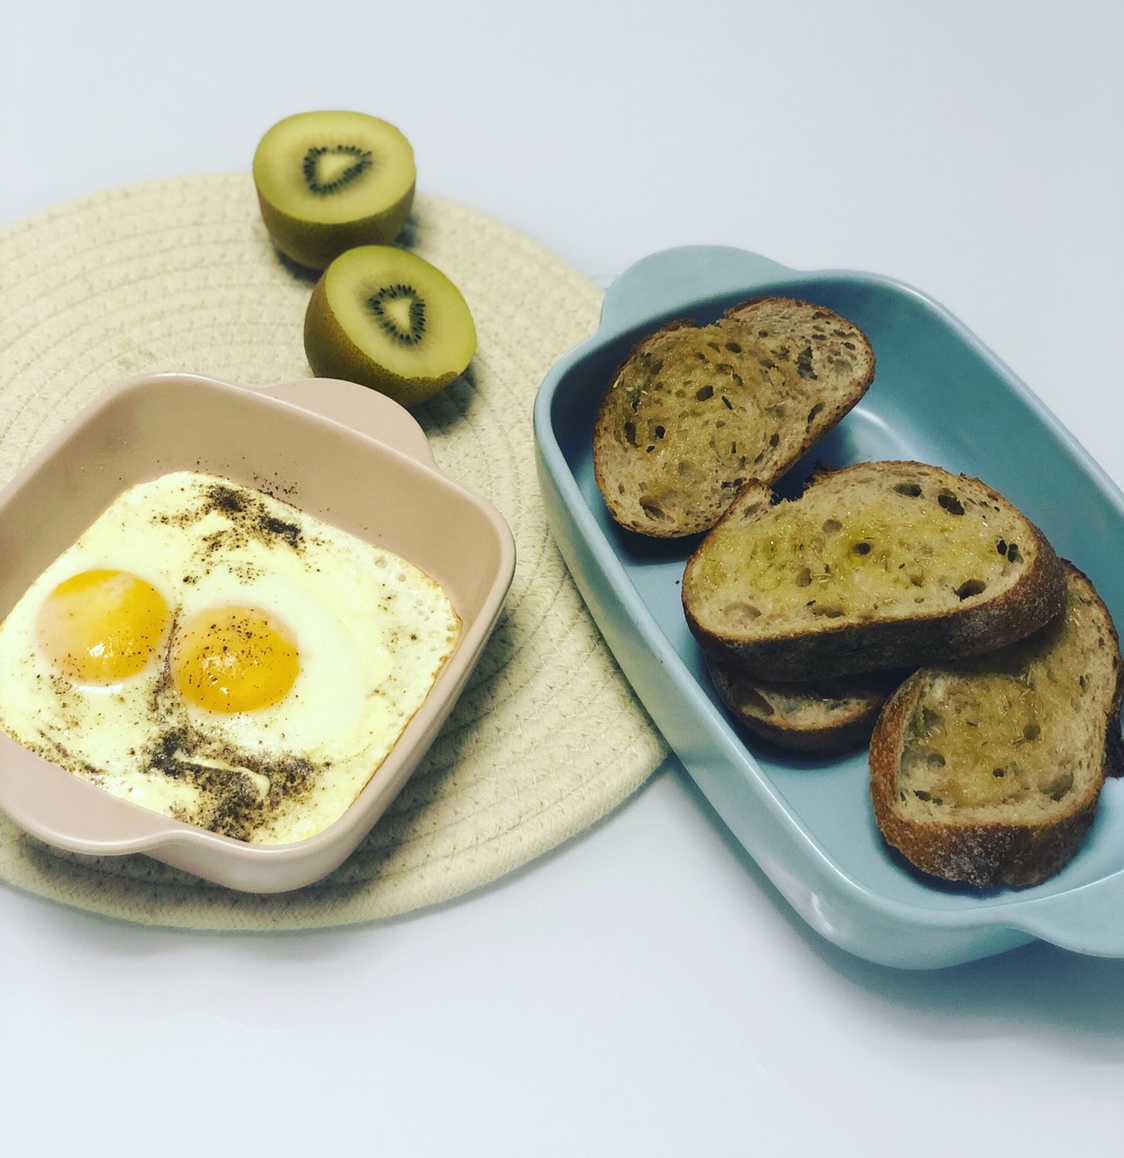 烤蛋佐迷迭香烤面包(Baked Eggs&Rosemary Bread)